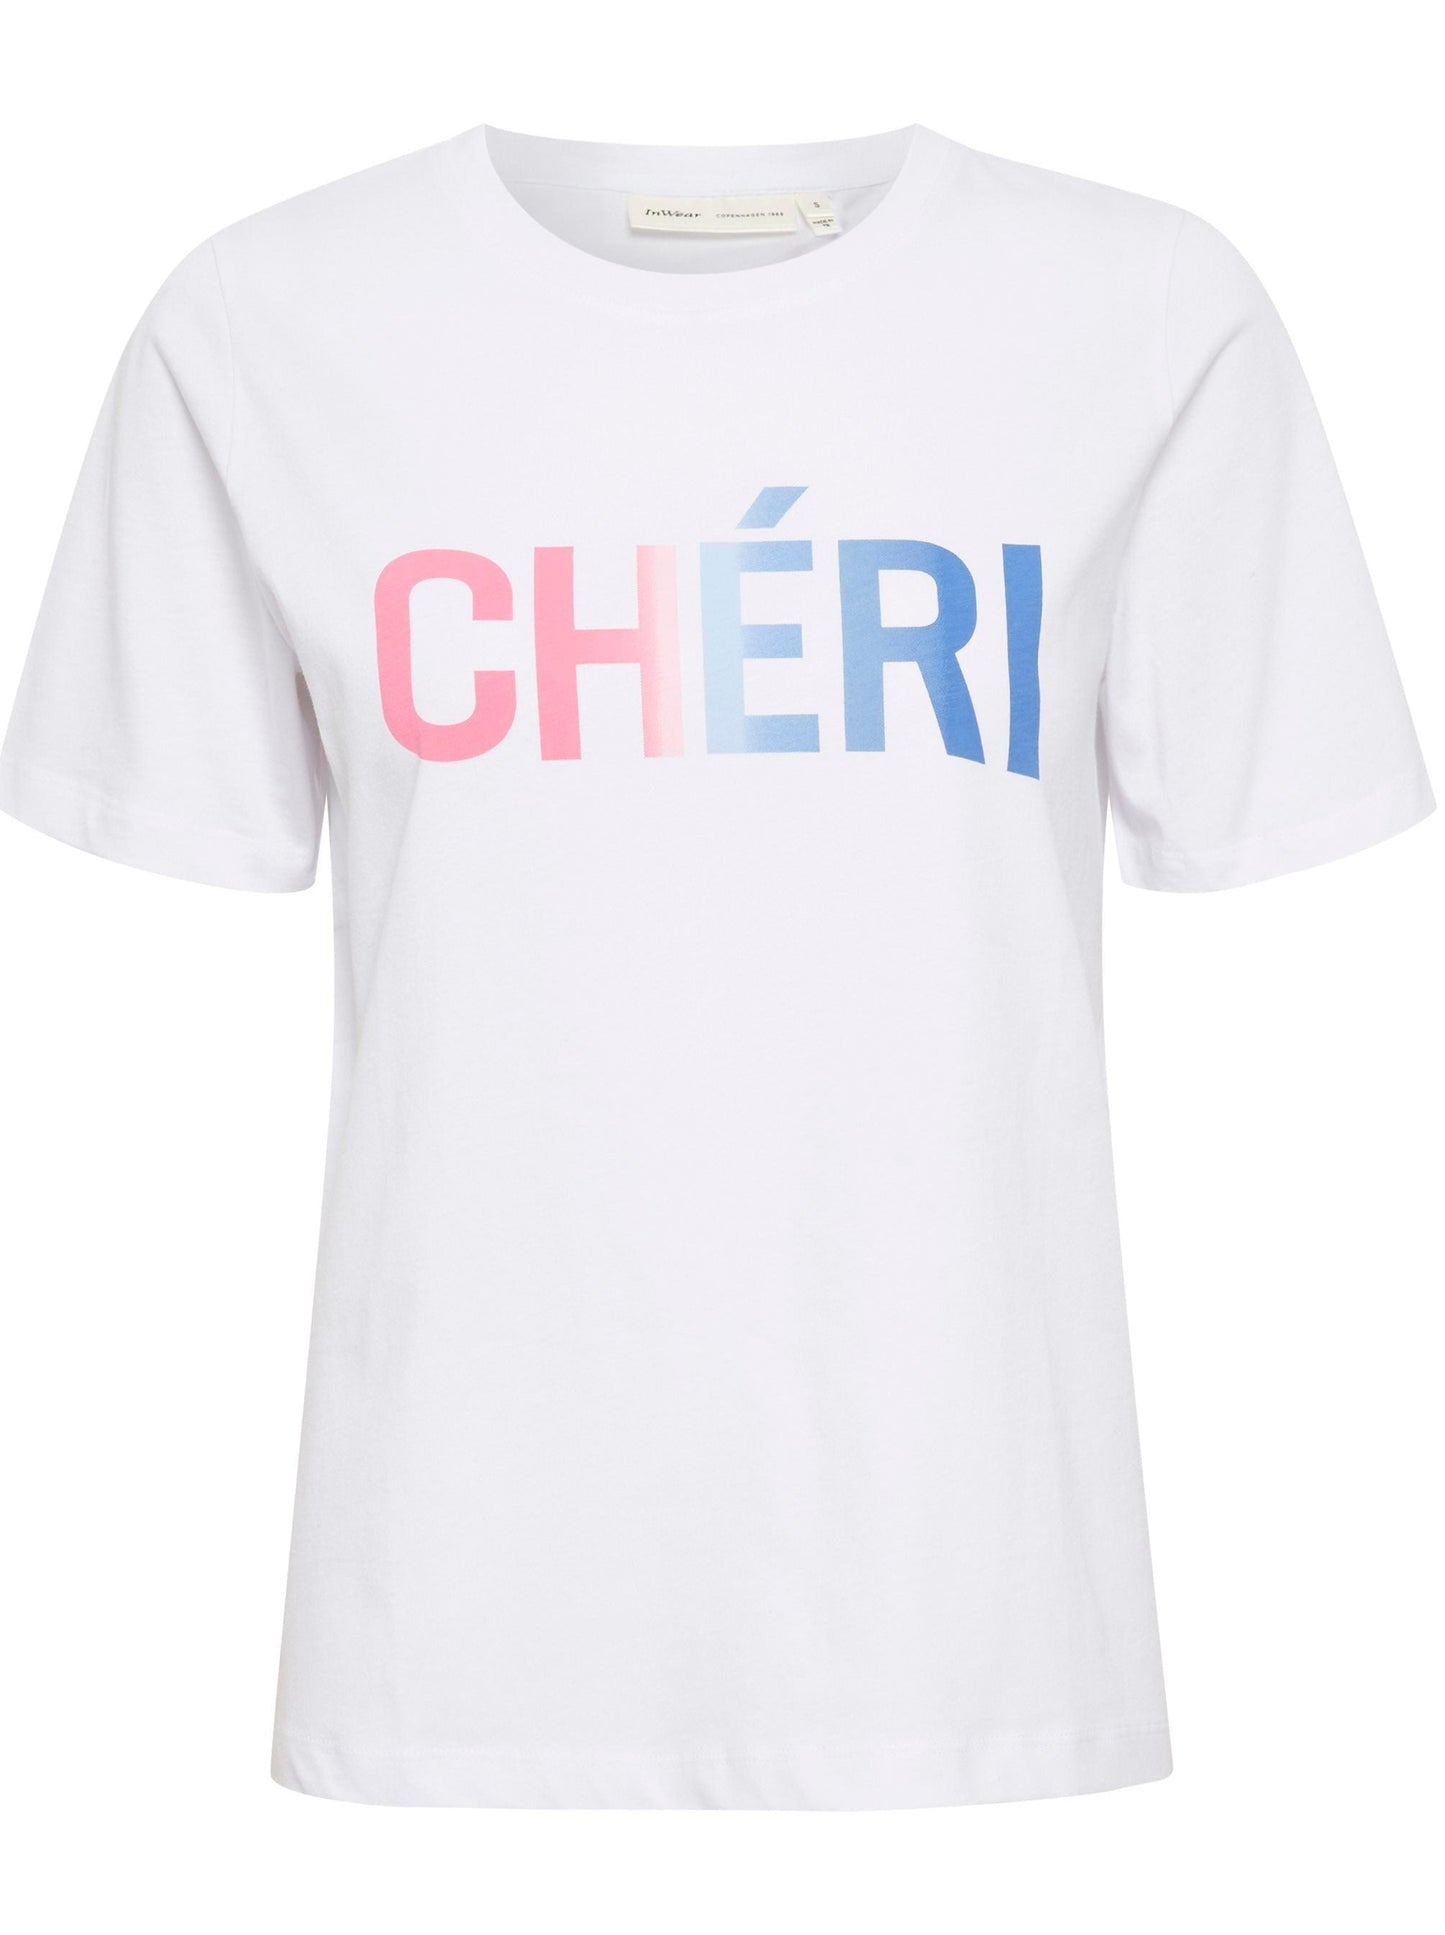 Inwear Zaki Frenchie Cheri t-skjorte